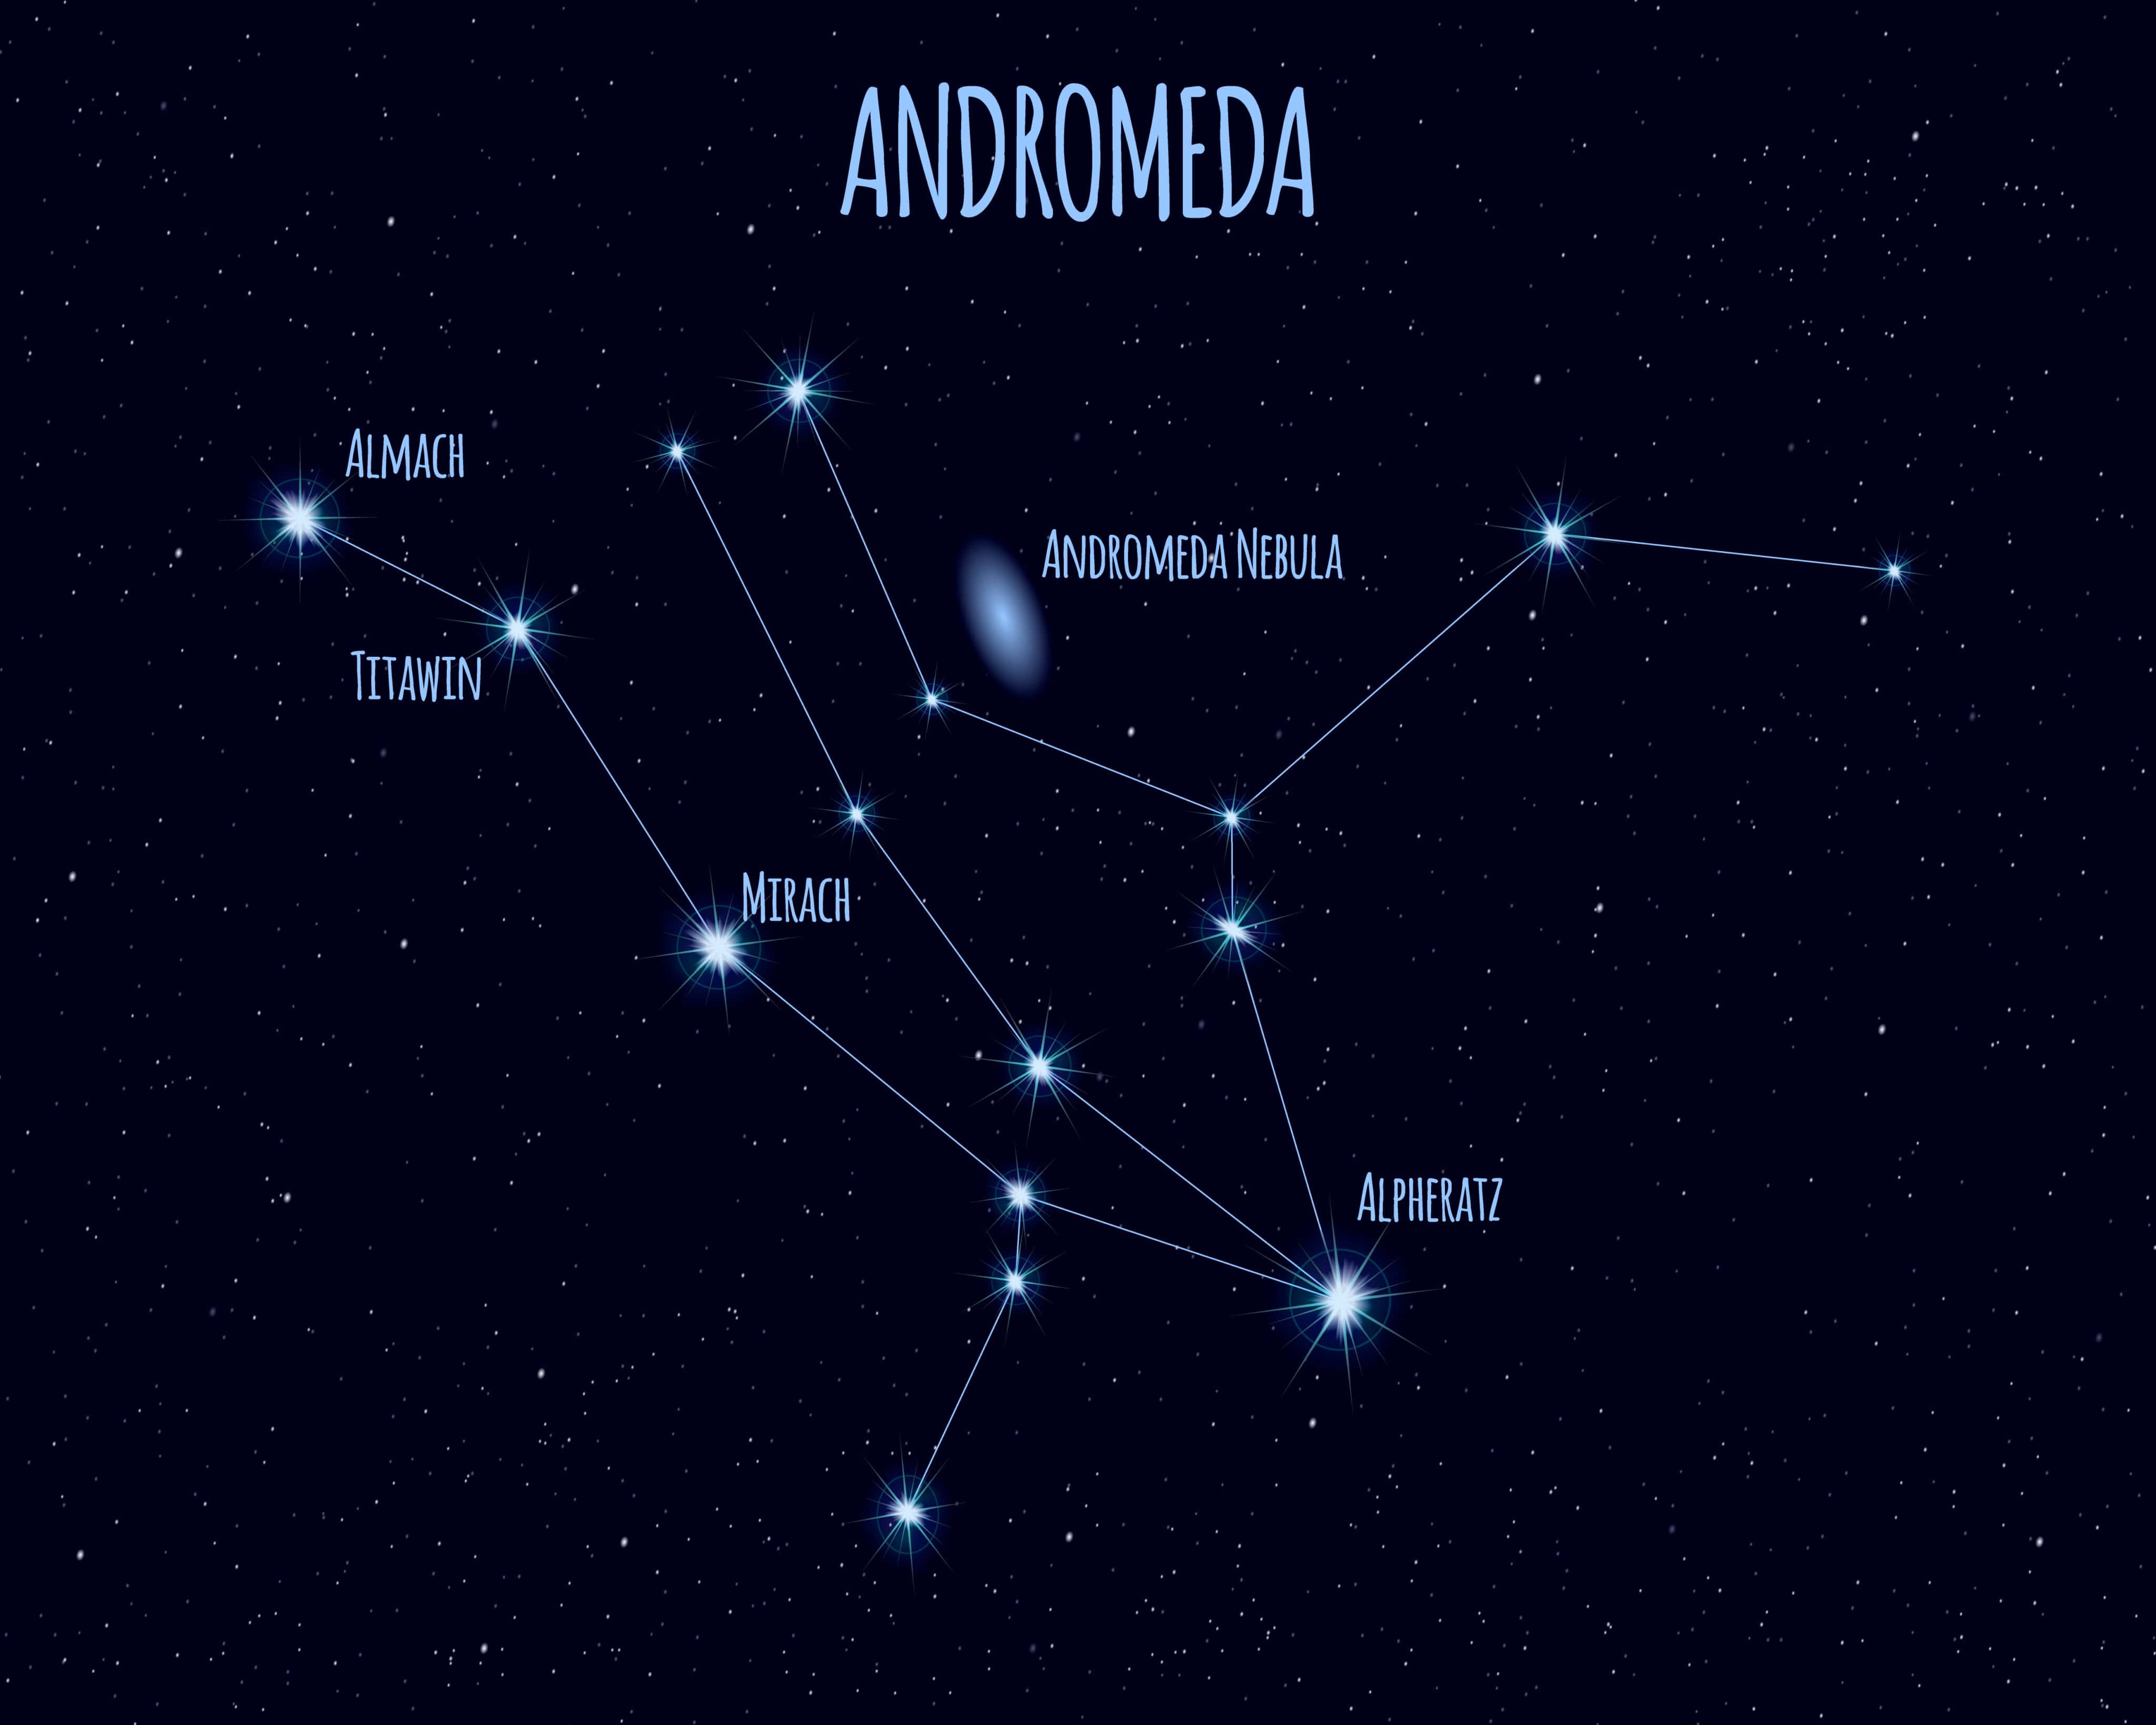 andromeda galaxy shown with key stars